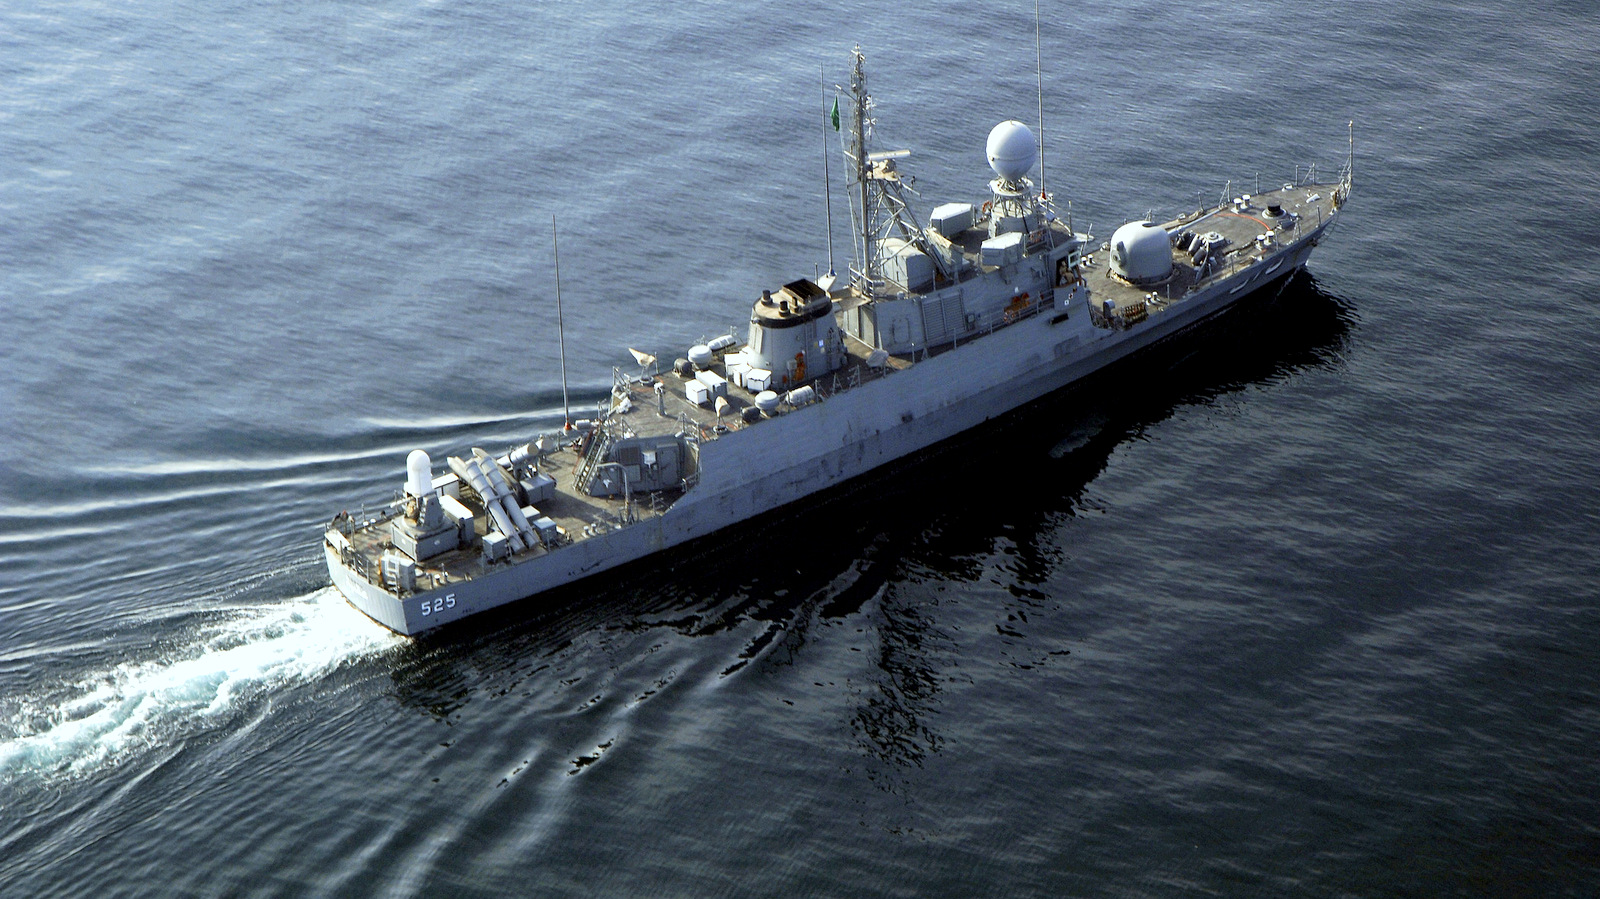 The Saudi Missile patrol boat the Oqbah.